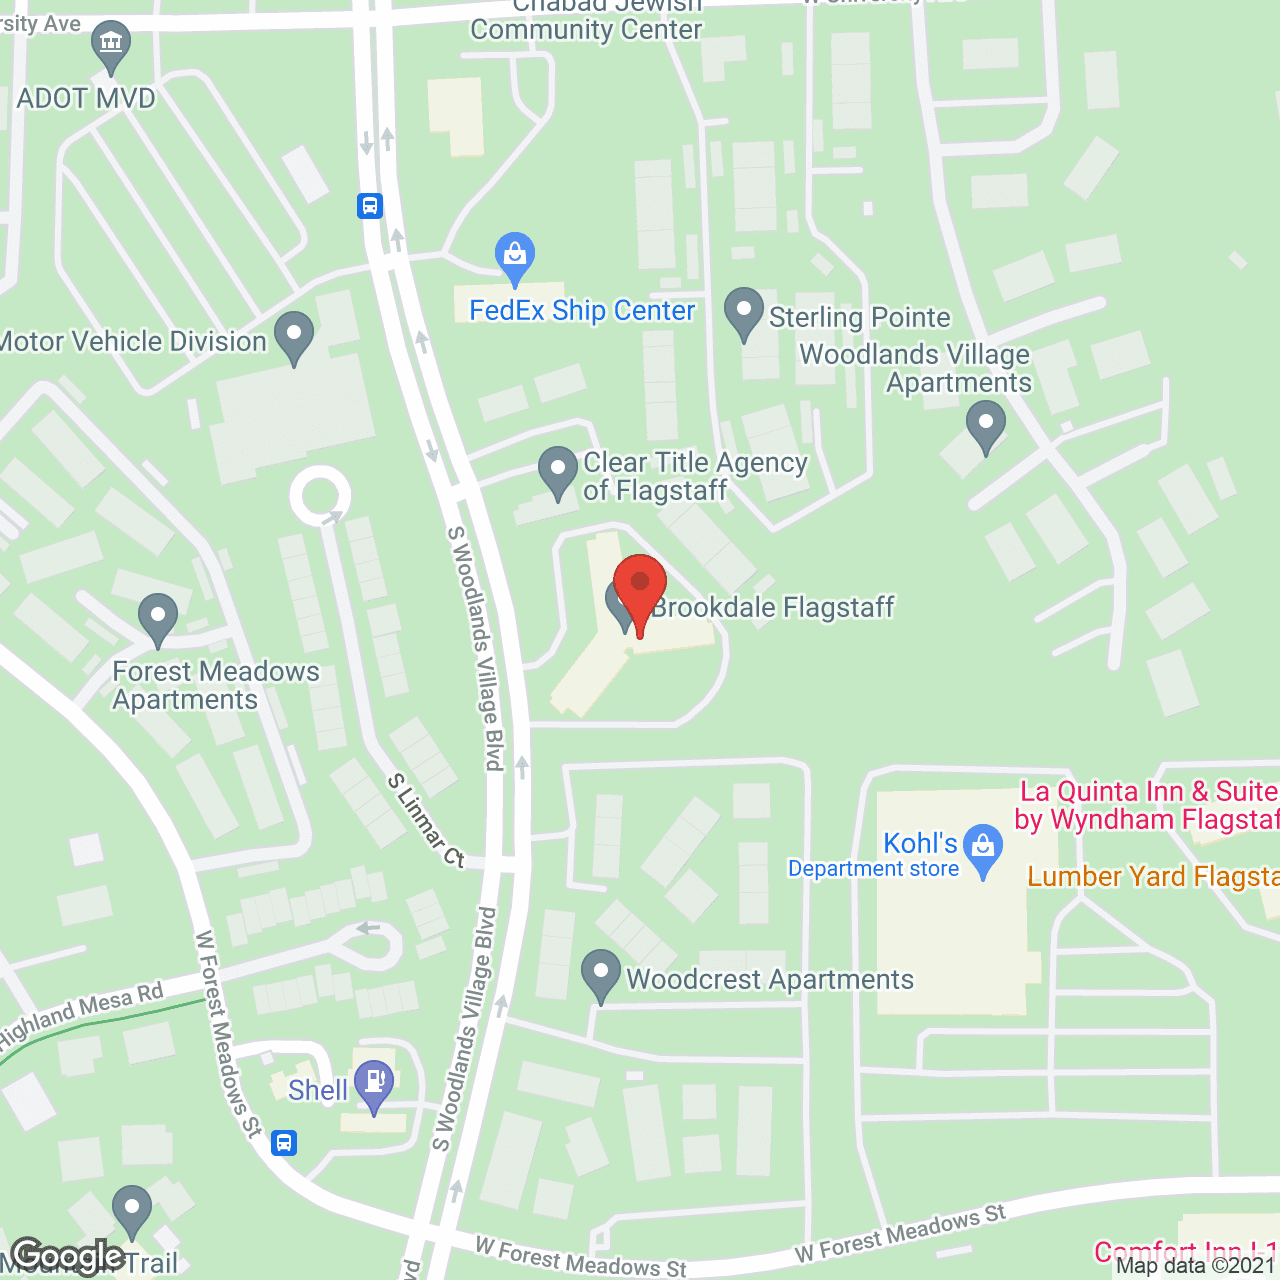 Brookdale Flagstaff in google map